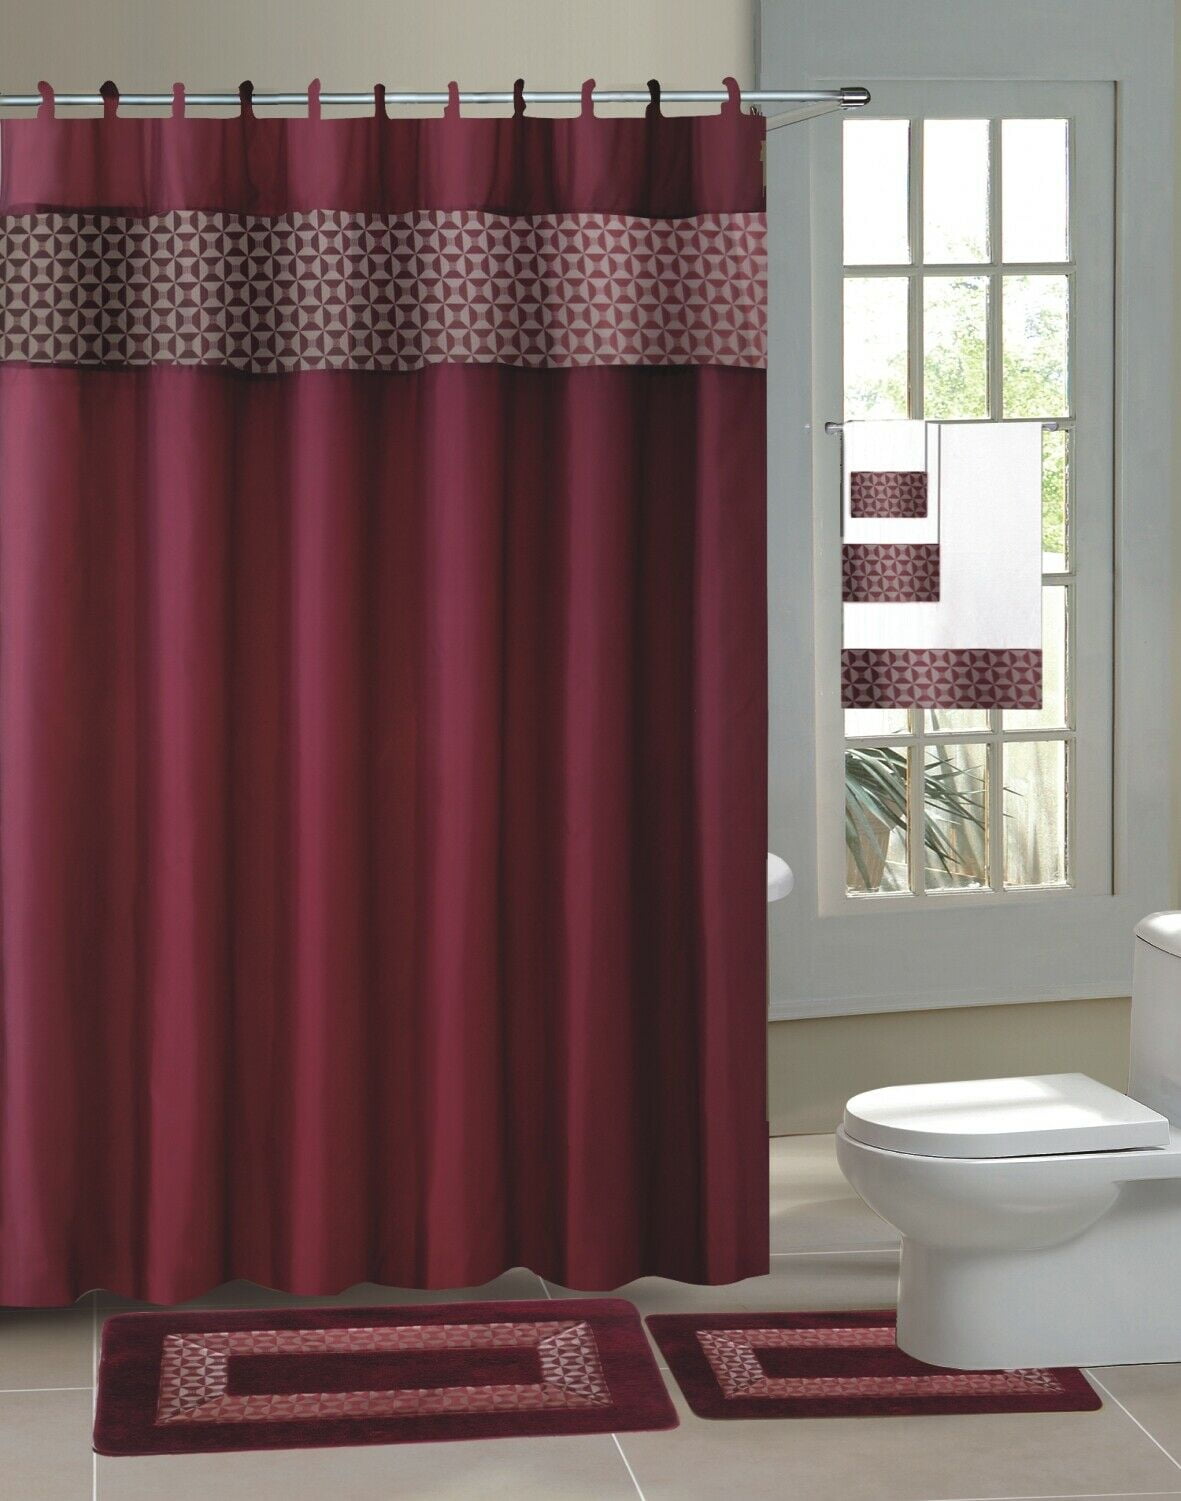 Details about   Purple Owl Door Bath Mat Toilet Cover Rugs Shower Curtain Bathroom Art Decor 